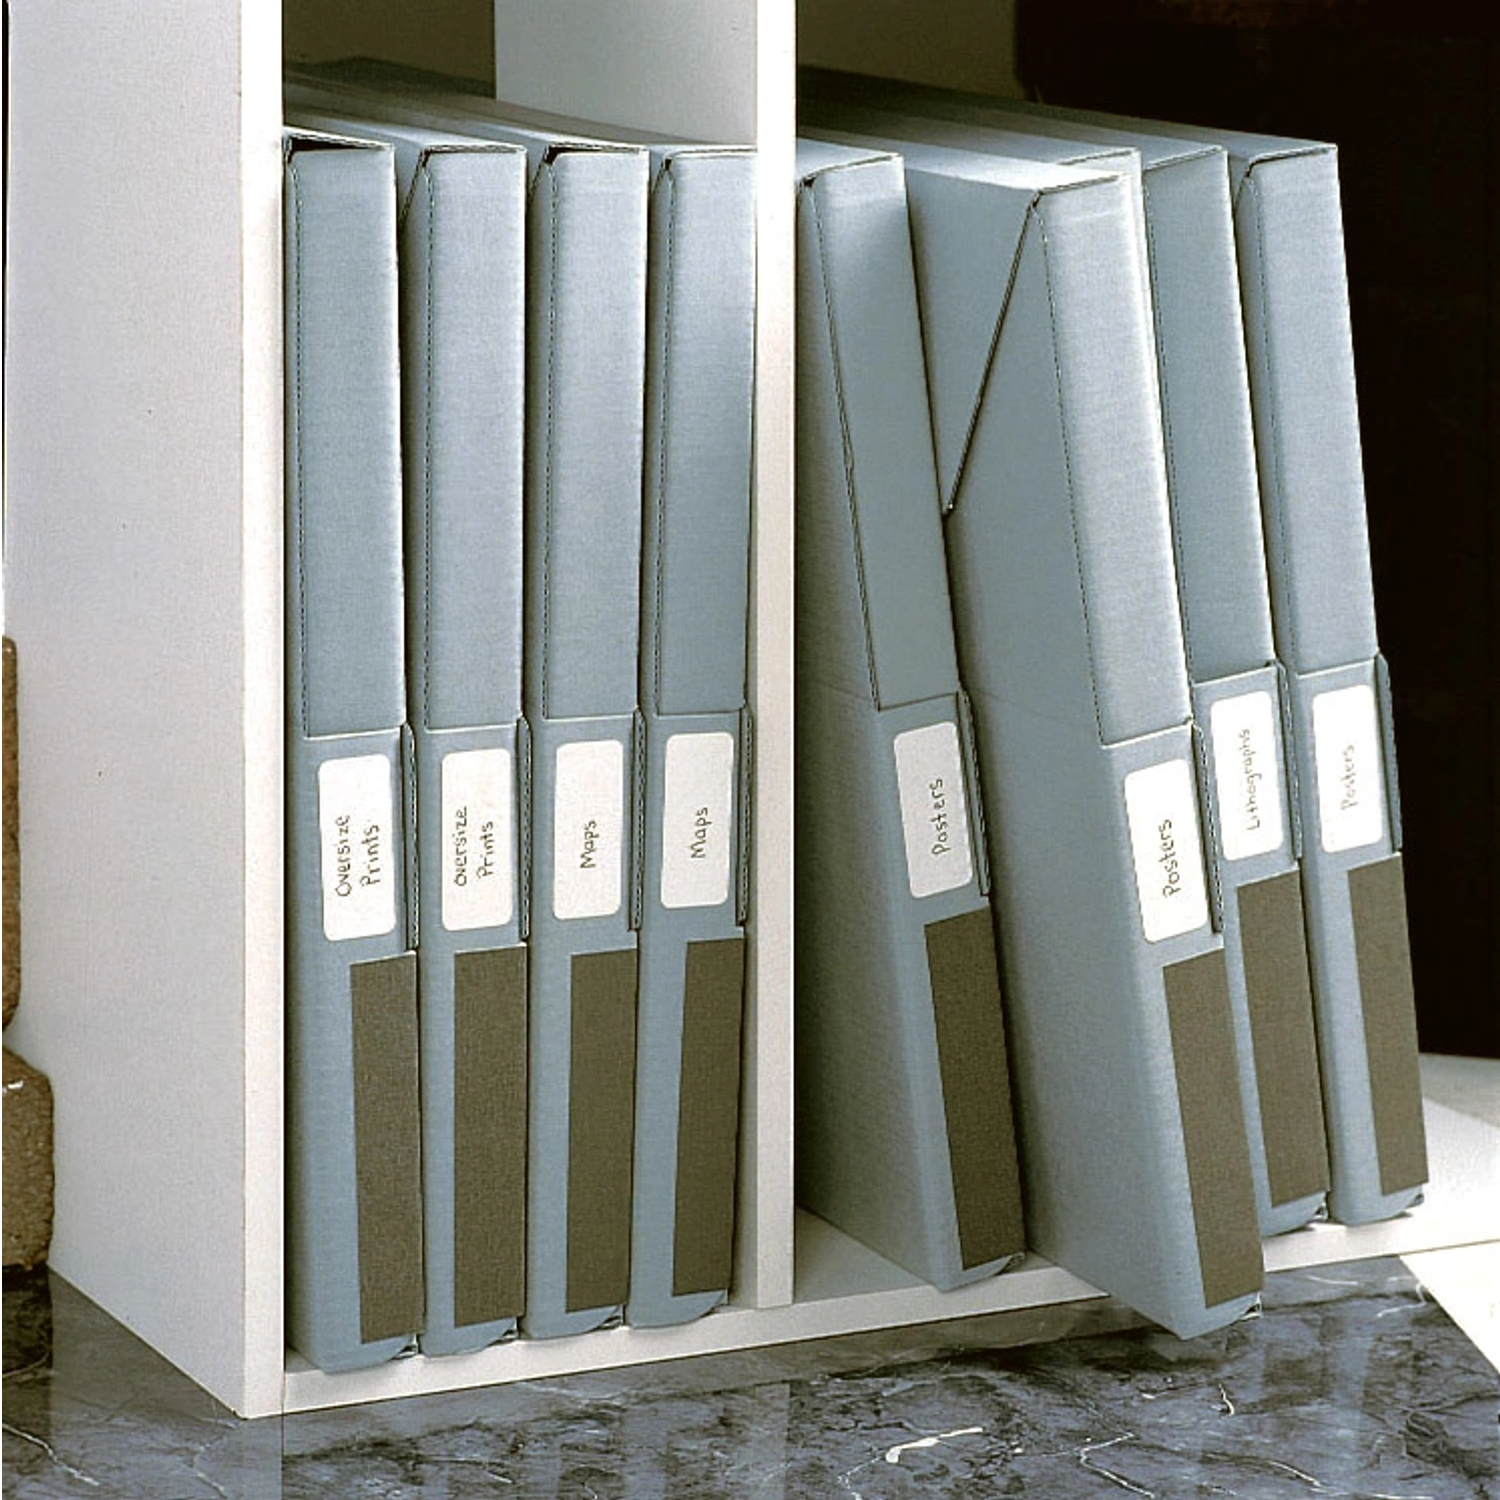 A Very Large Art Portfolio Case - Portfoliobox